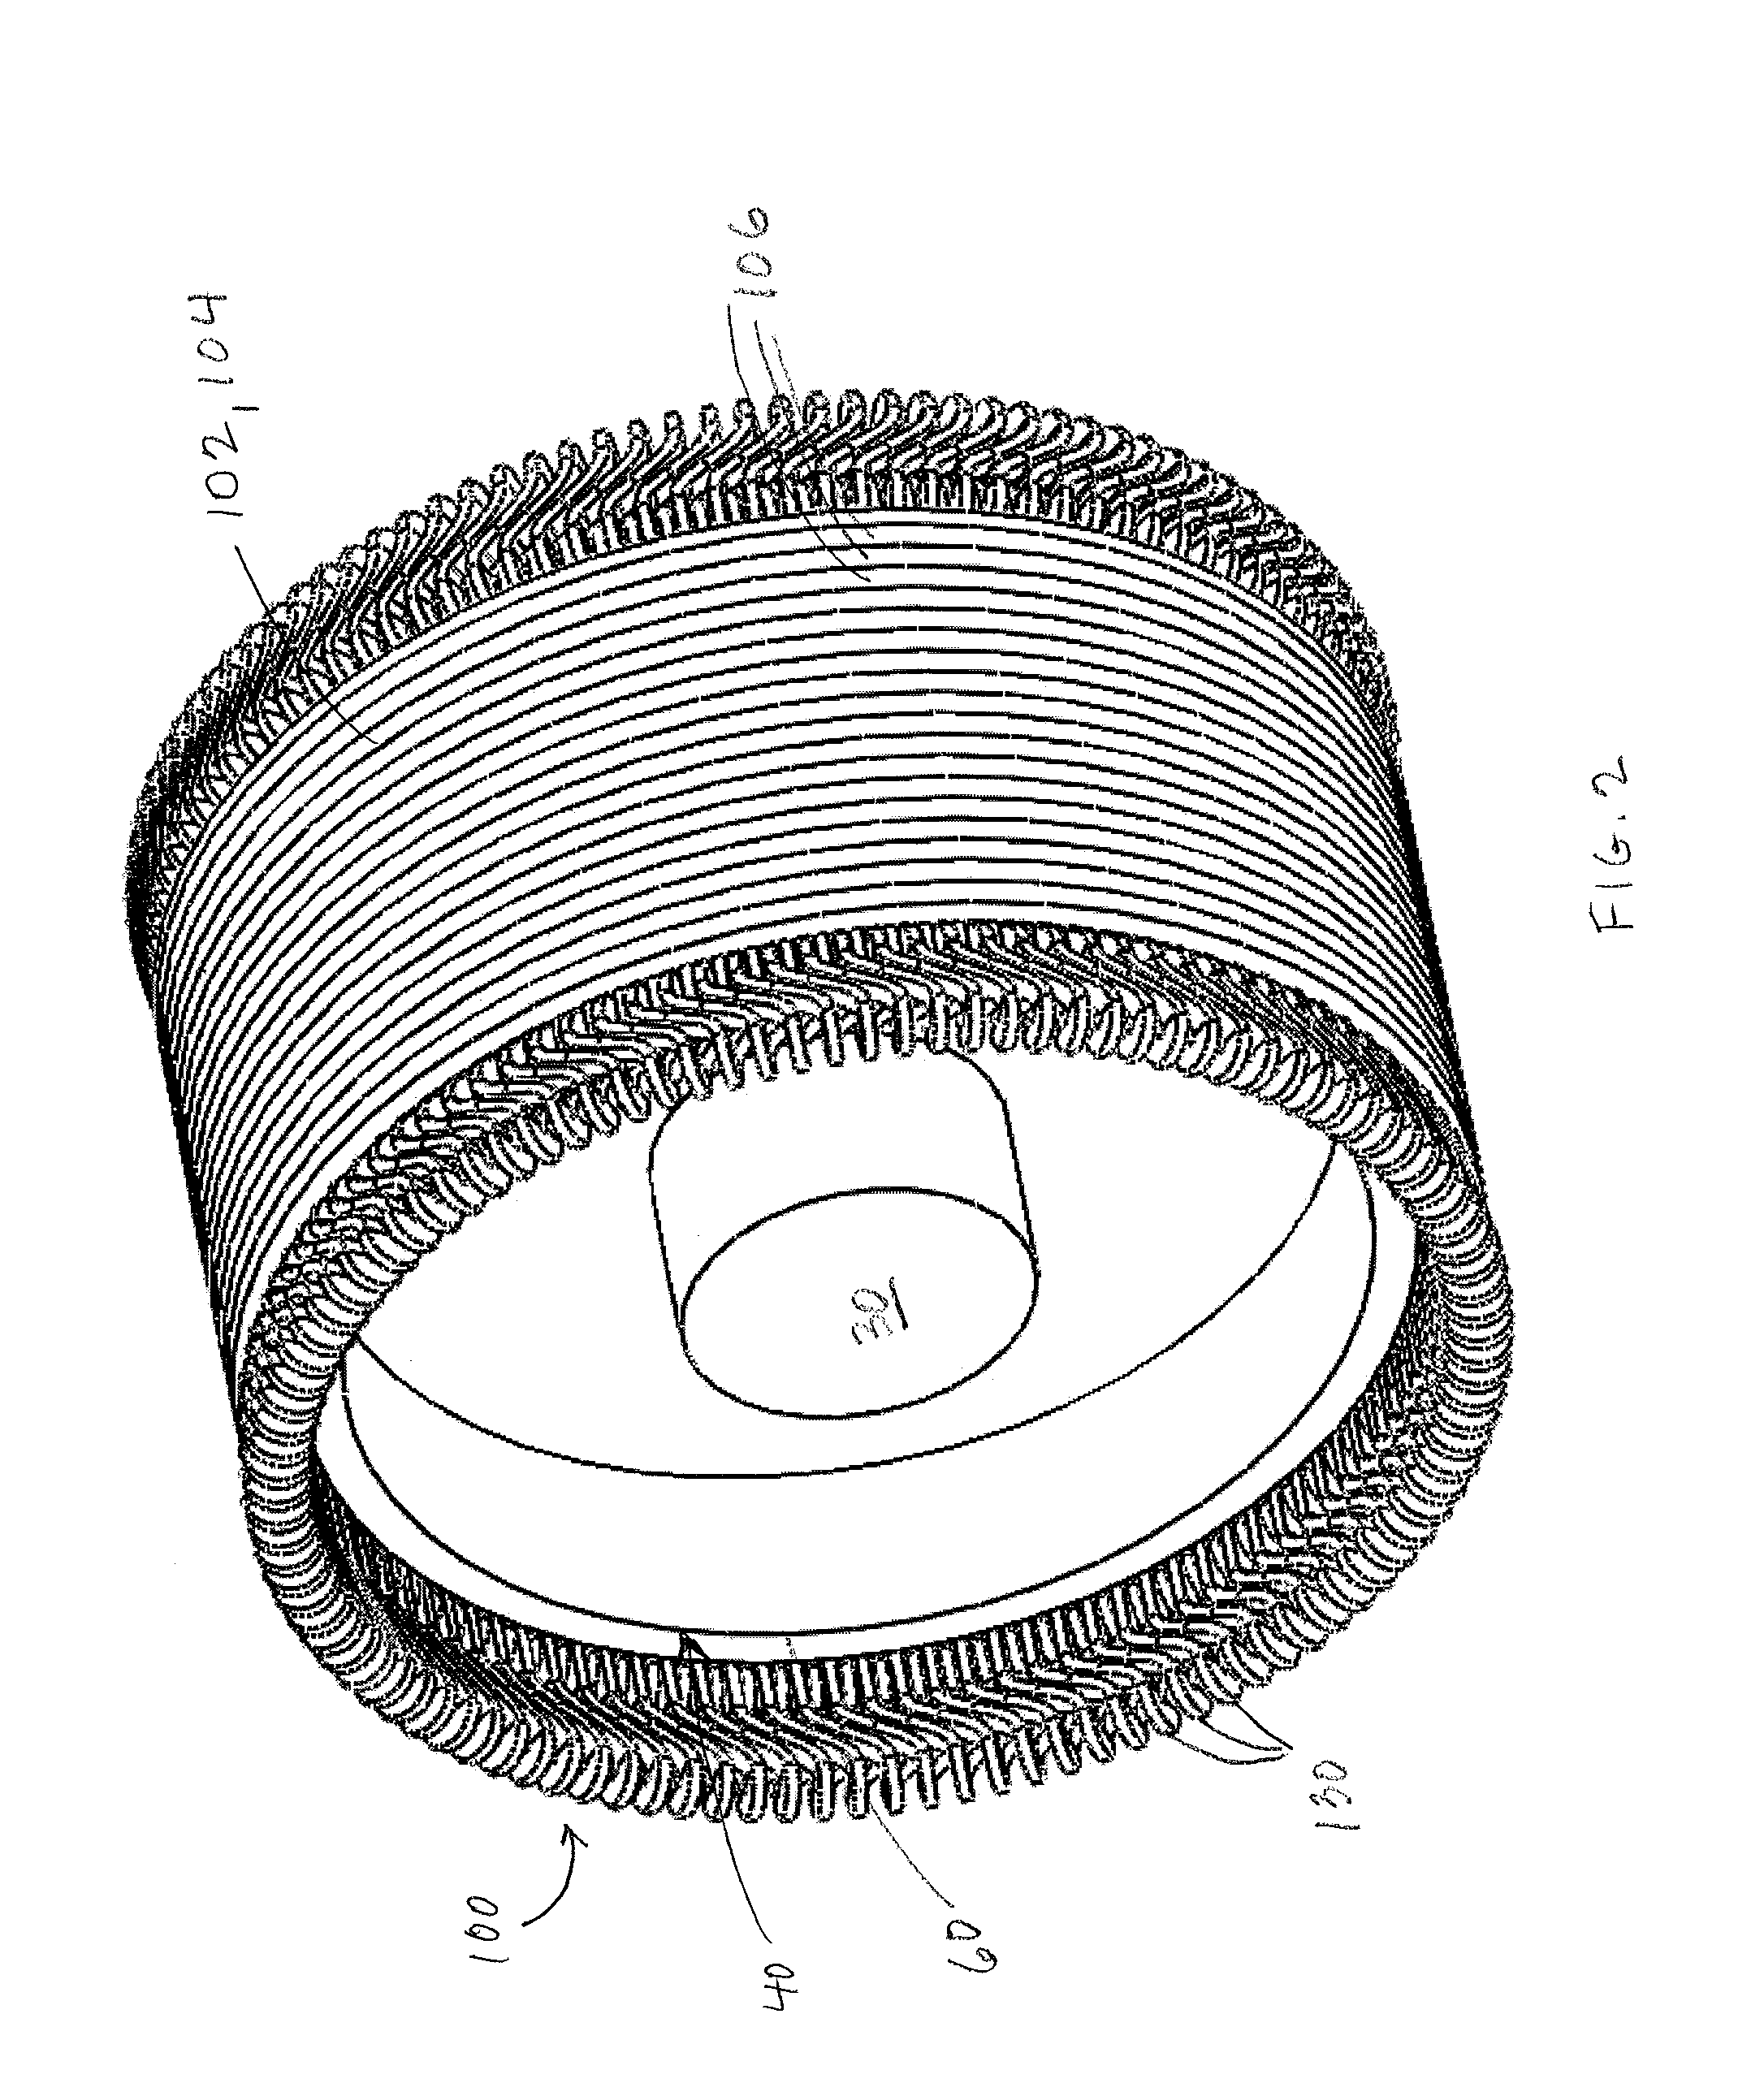 Generator with ferromagnetic teeth